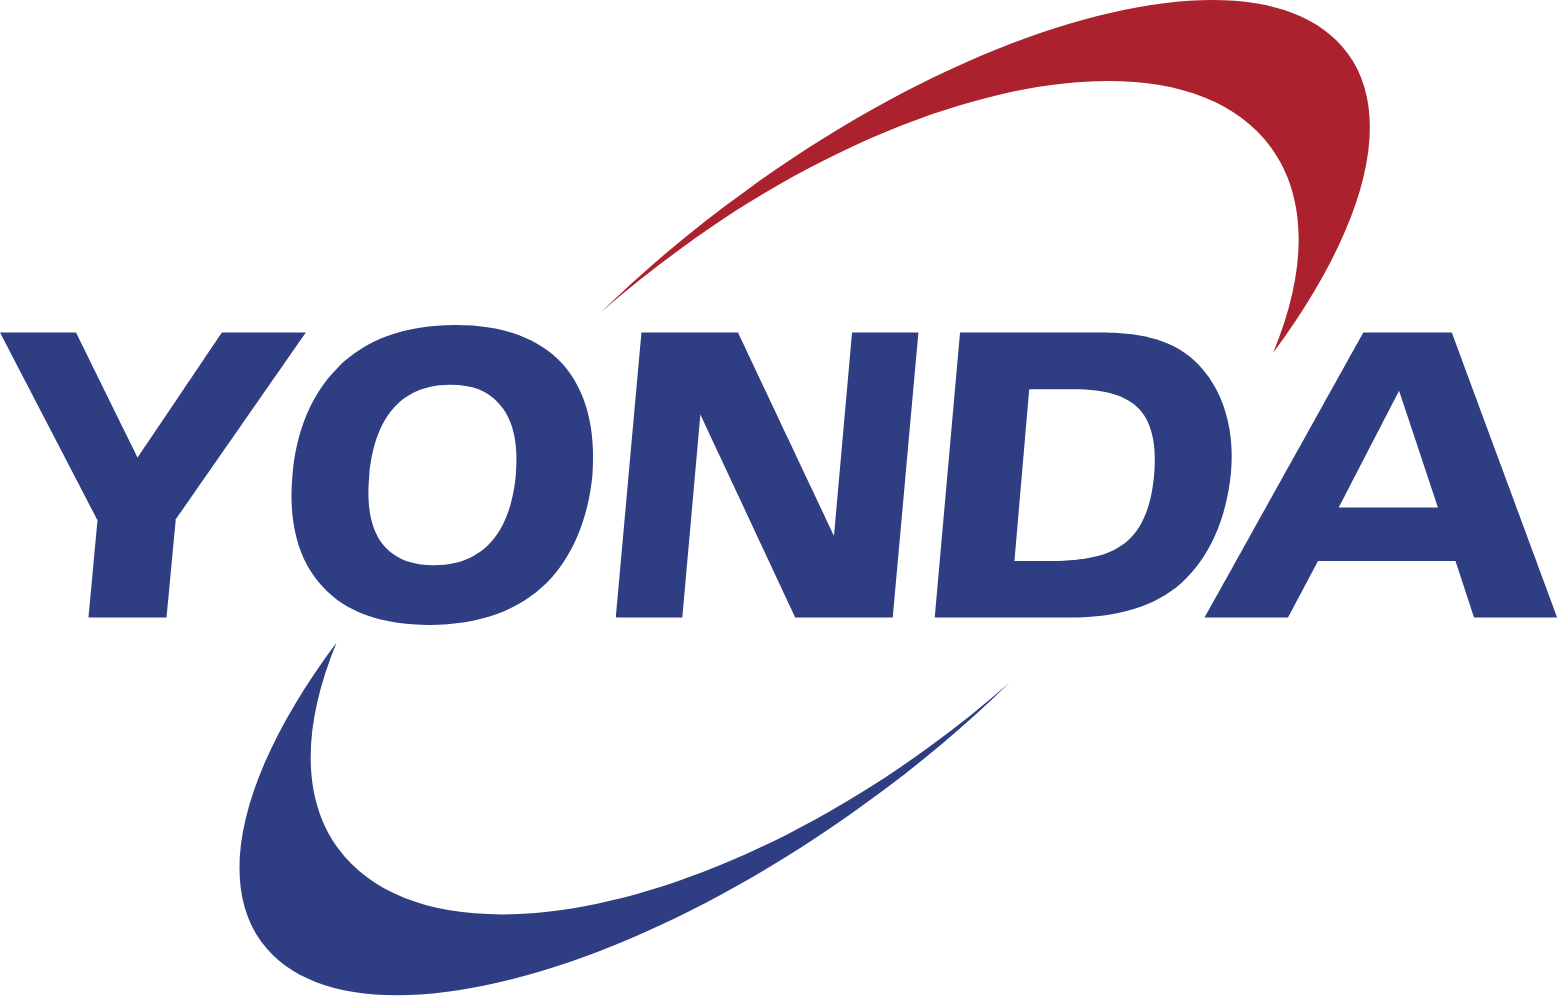 China Yongda Automobiles Services logo (PNG transparent)